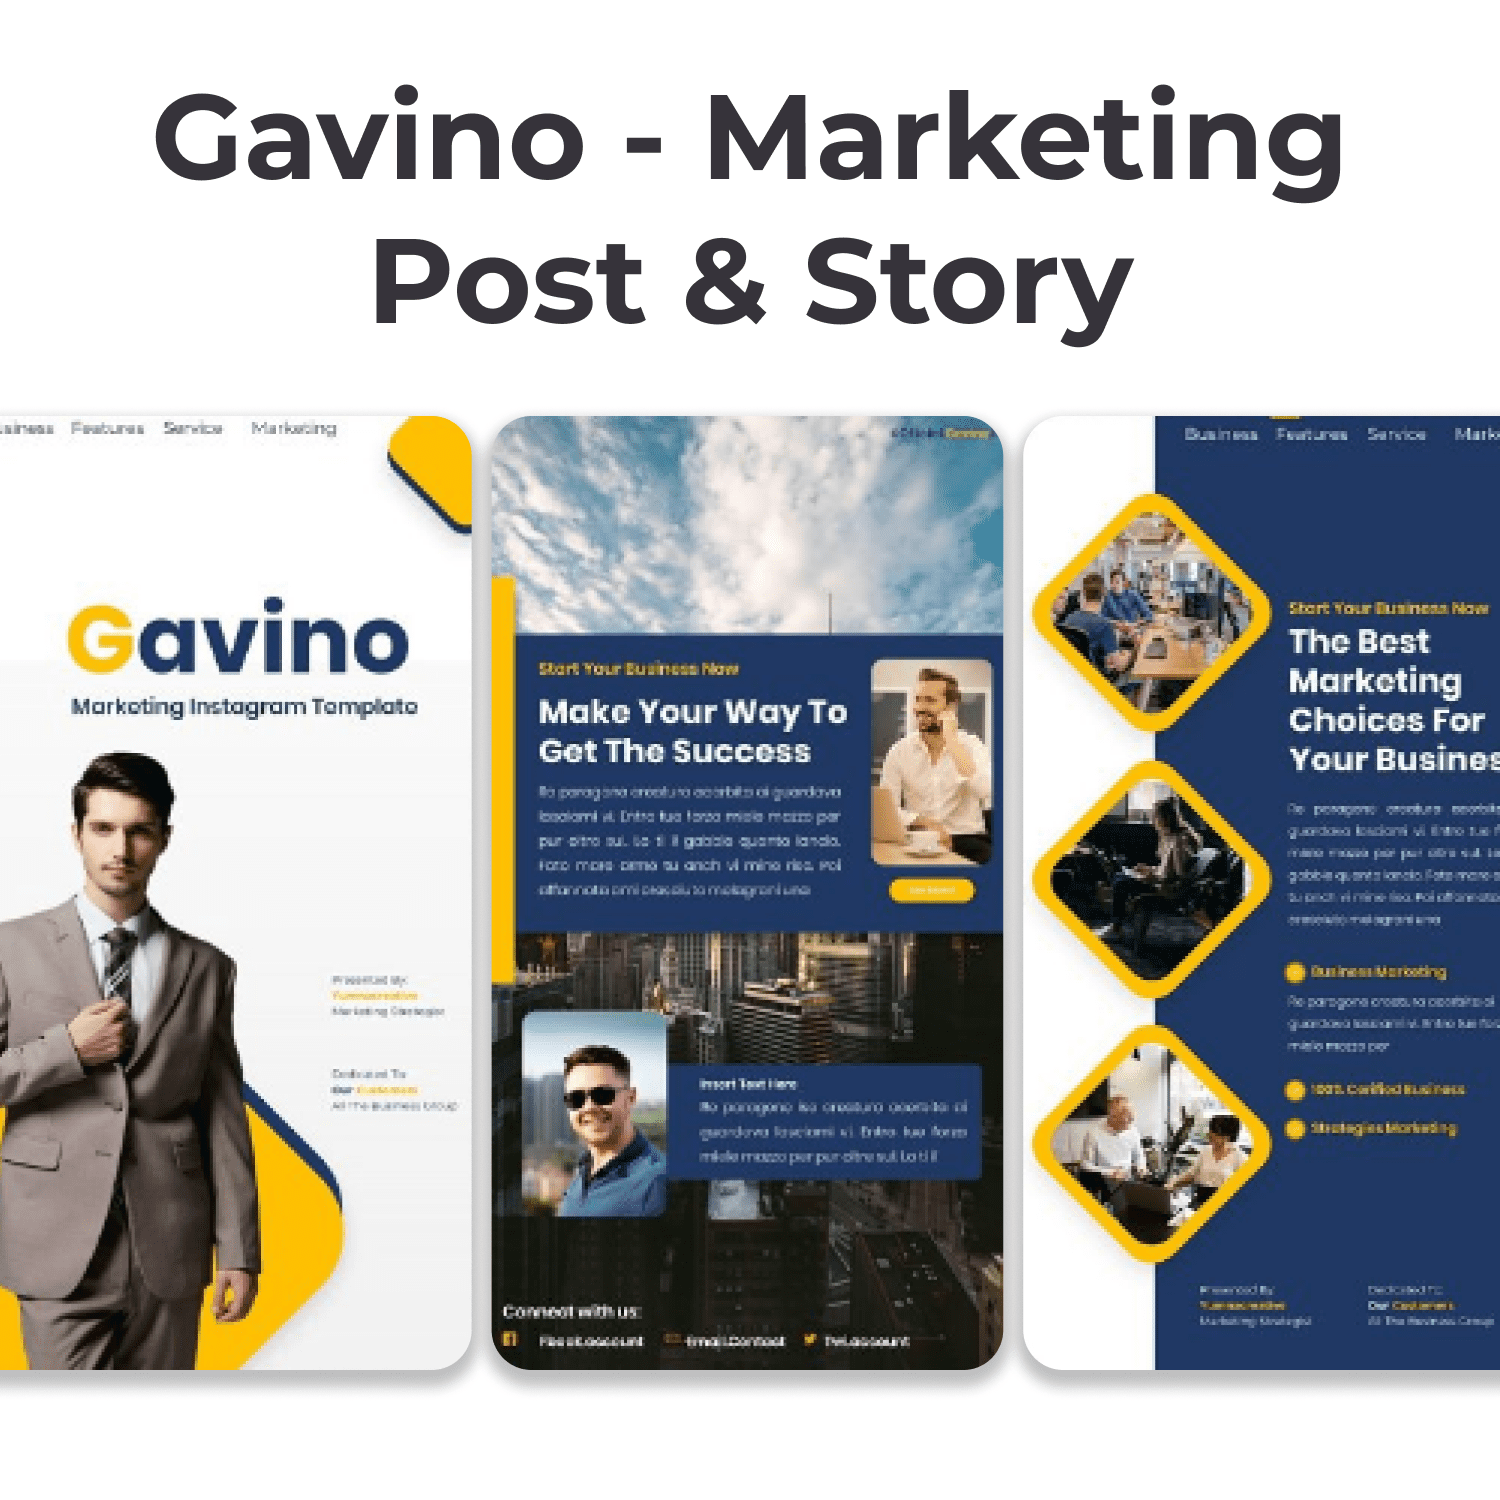 Gavino - Marketing Post & Story